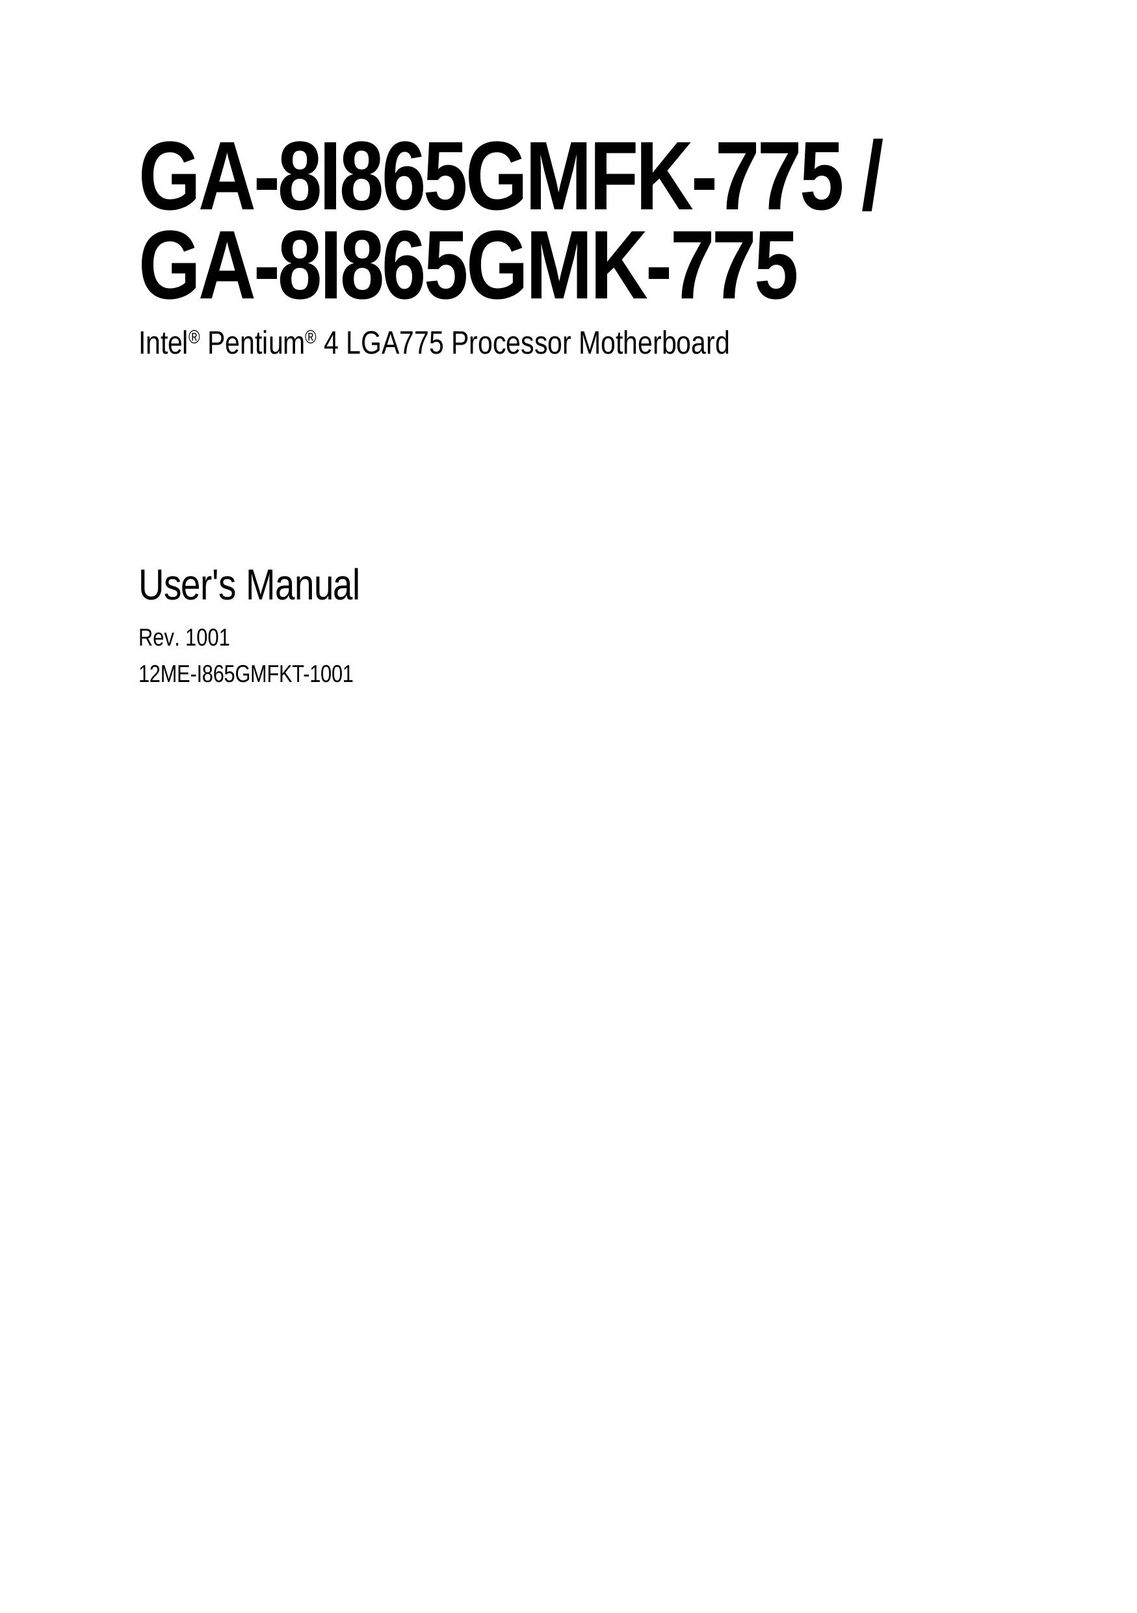 Gigabyte GA-8I865GMFK-775 Network Card User Manual